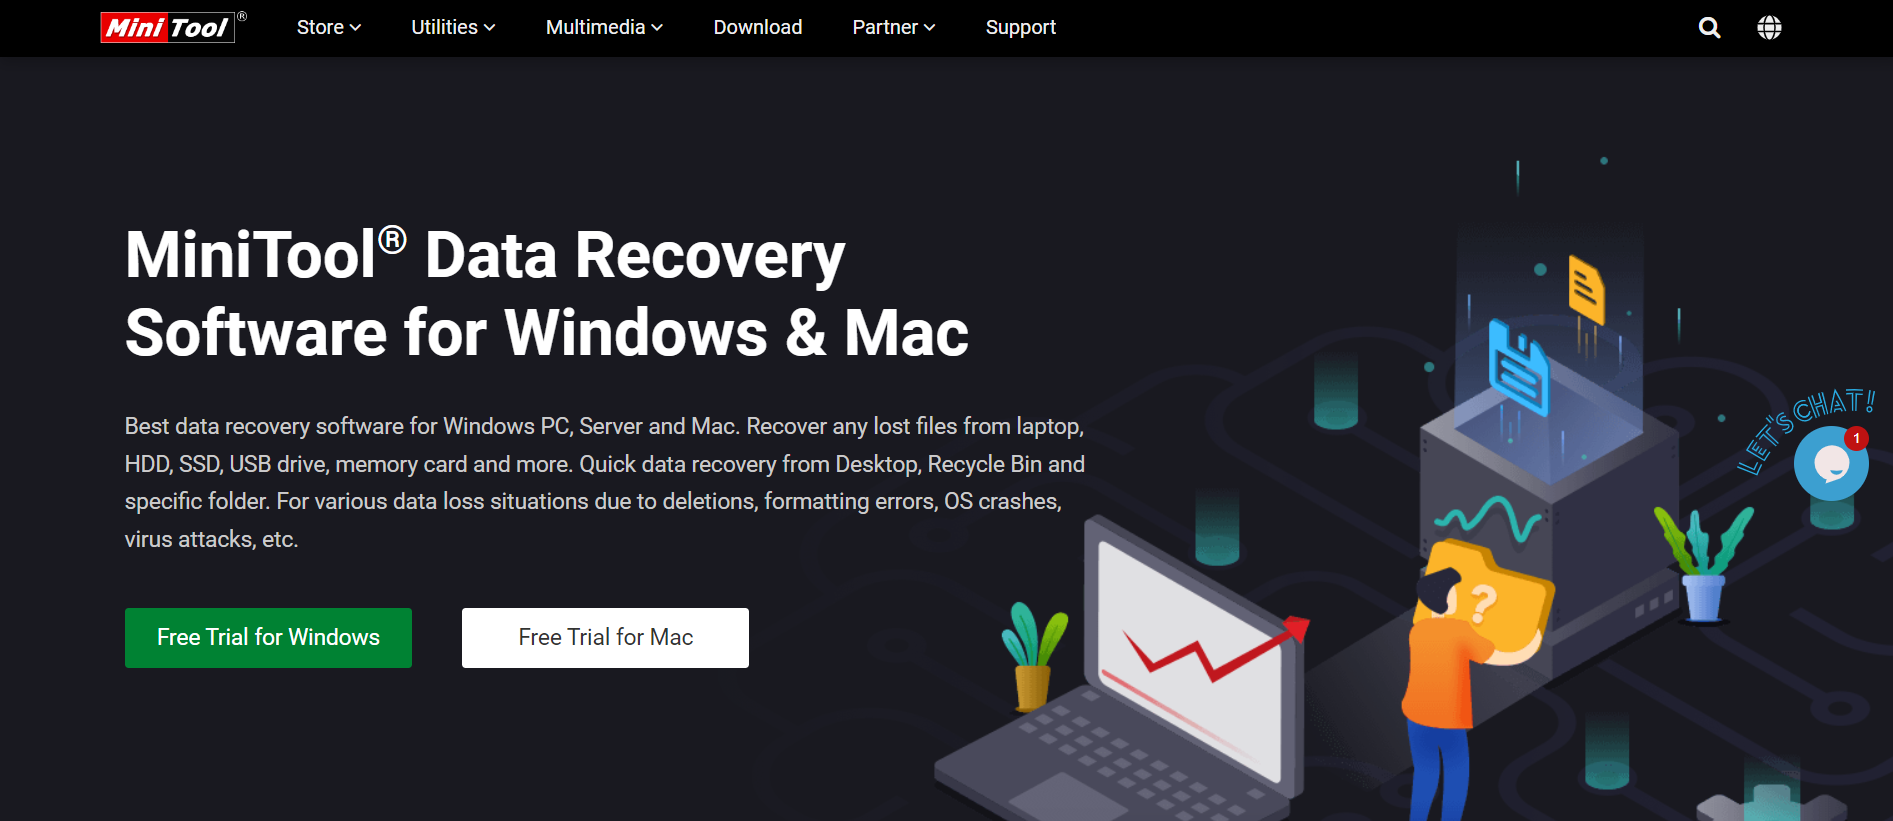 MiniTool Data Recovery Software